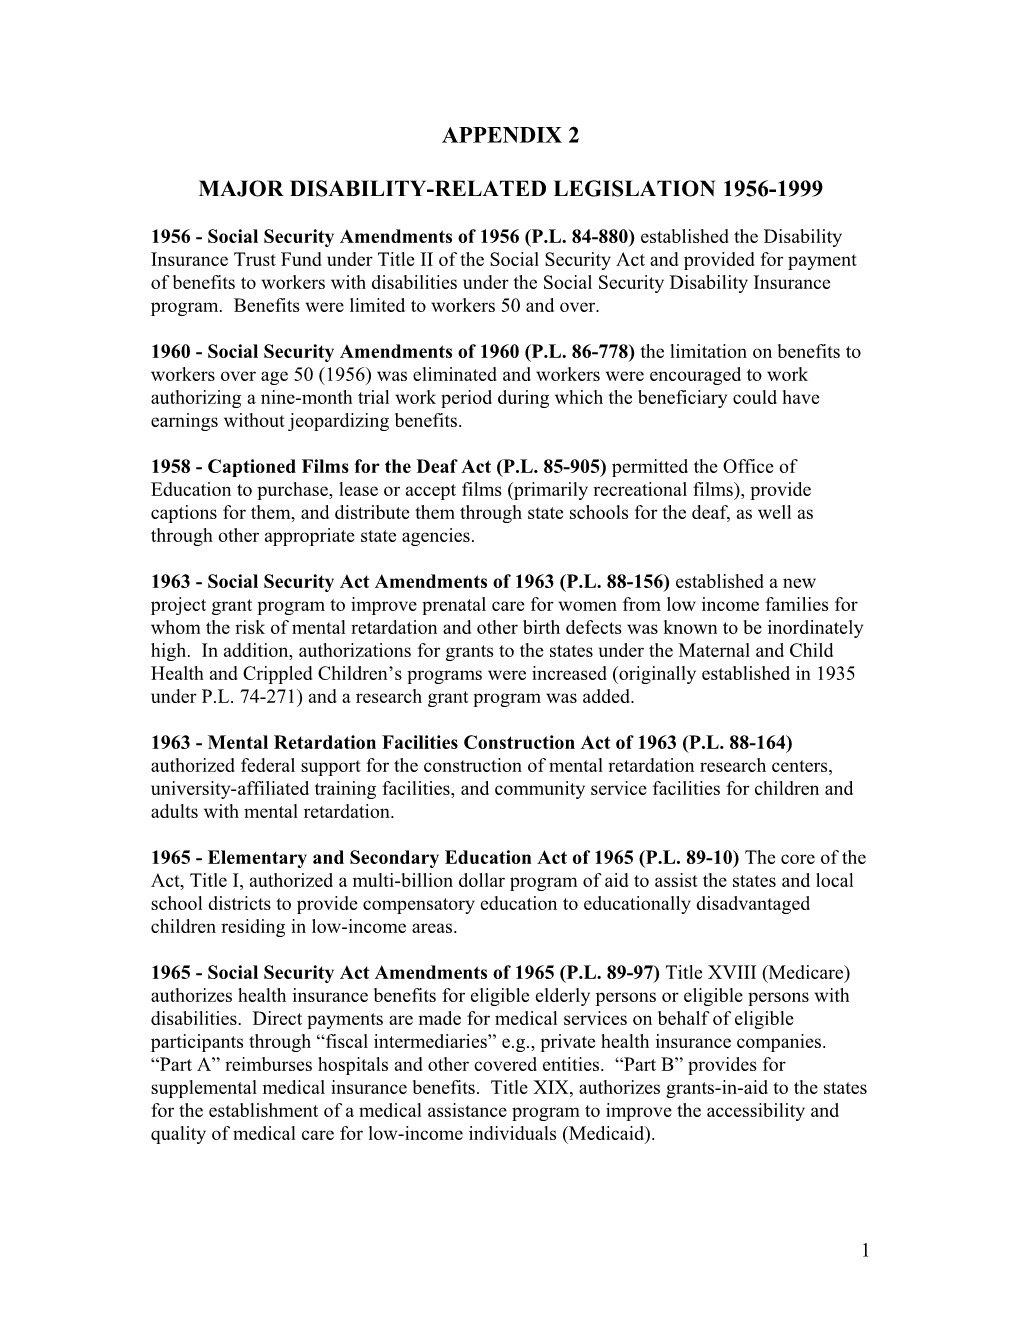 Major Disability-Related Legislation 1956-1999